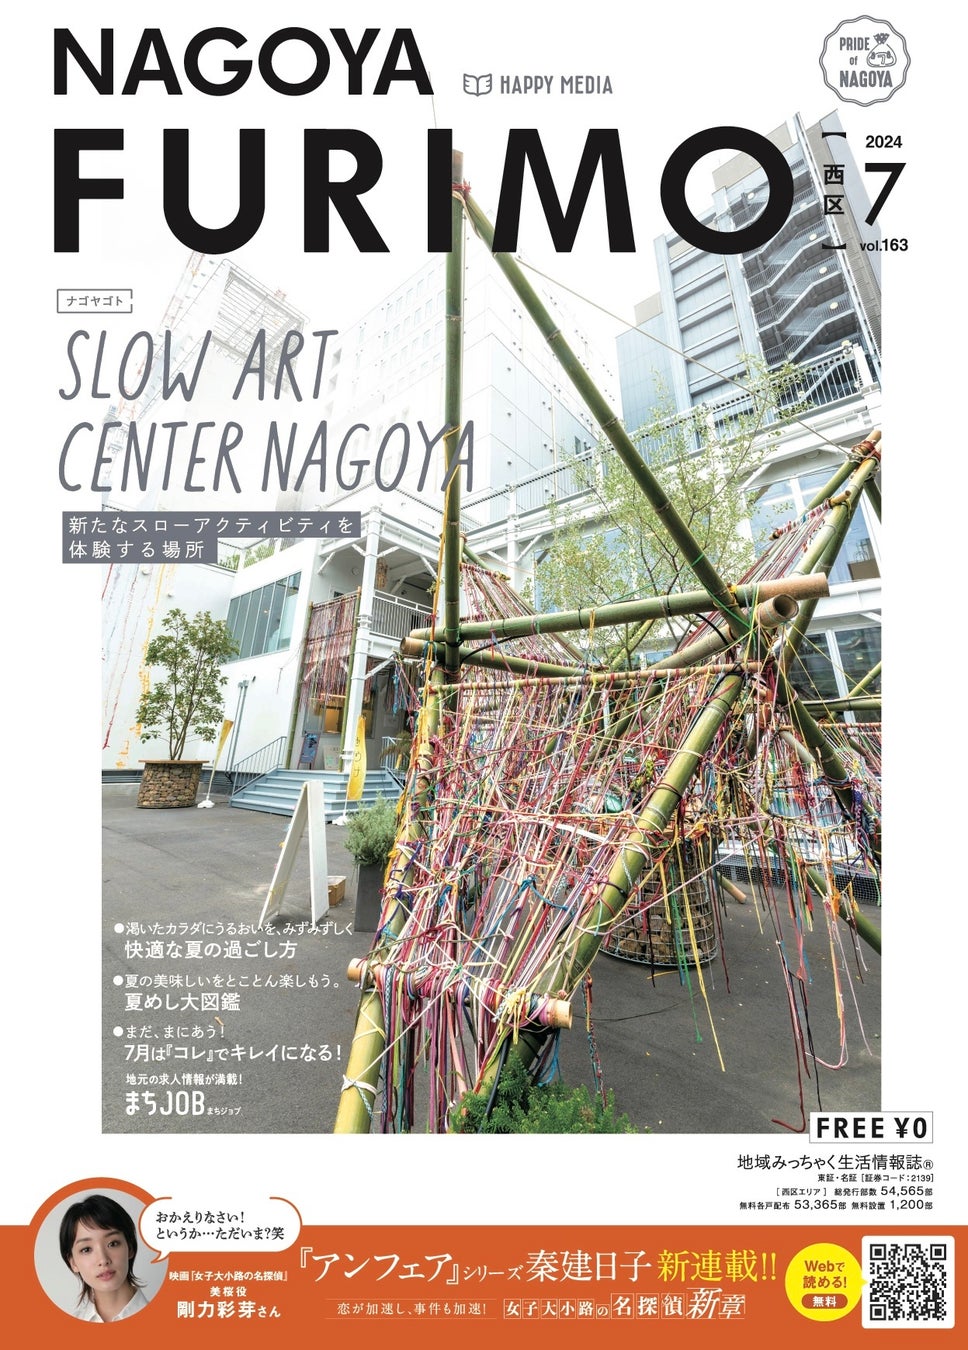 【SLOW ART CENTER NAGOYA】 「名古屋をスタートアップの街へ」 南区密着のフリーマガジン NAGOYA FURIMO 7月号にて特集